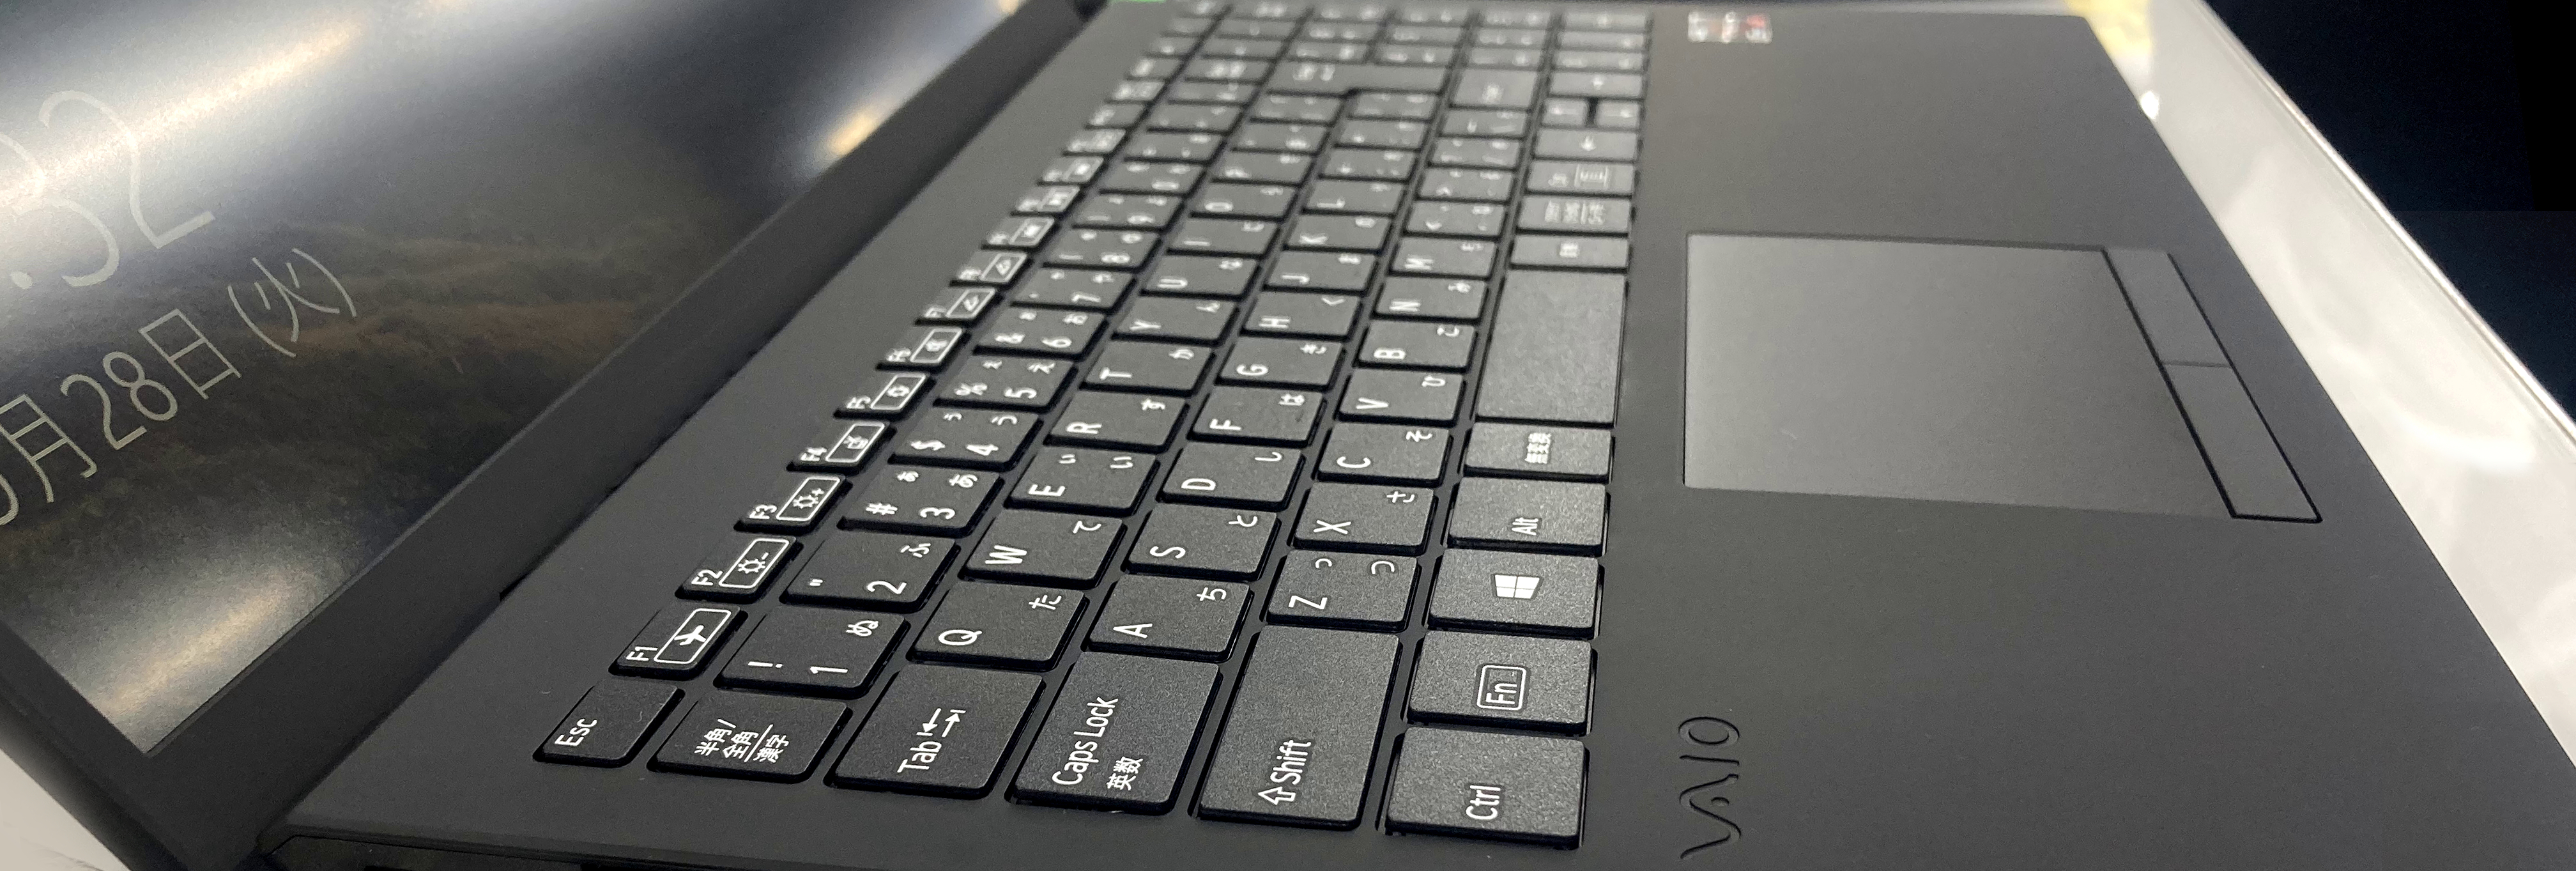 VAIO FL15のキーボード拡大